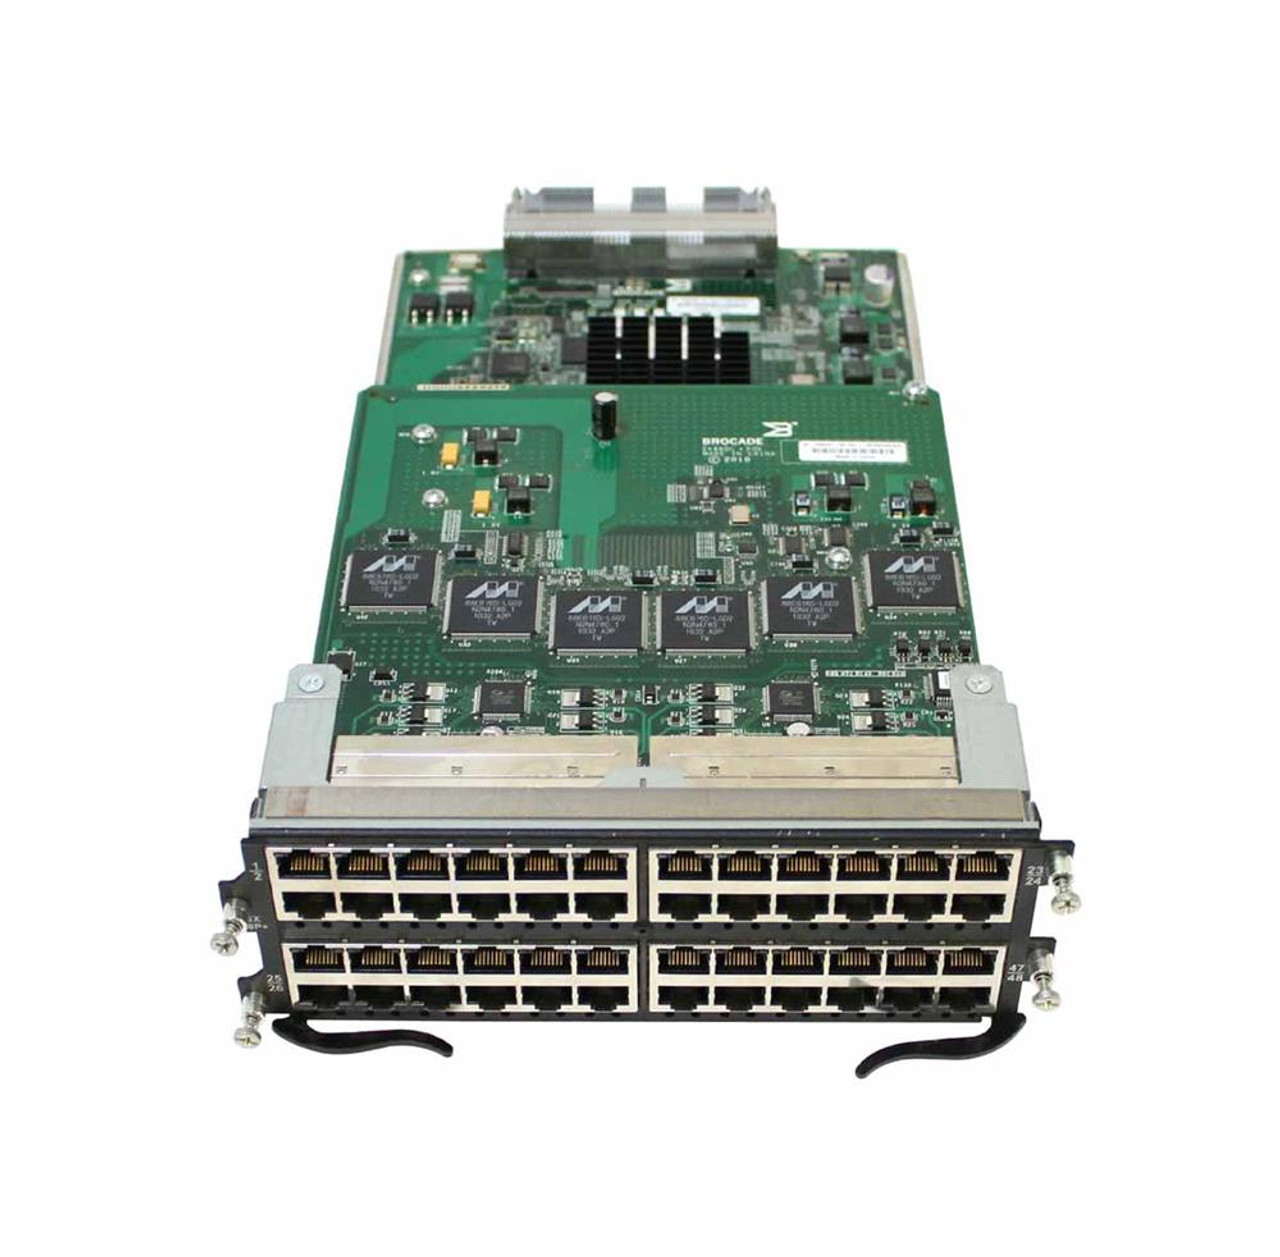 SX-FI48GPP Brocade SX-FI48GPP 48-Port Switching Module 48 x 10/100/1000Base-T LAN